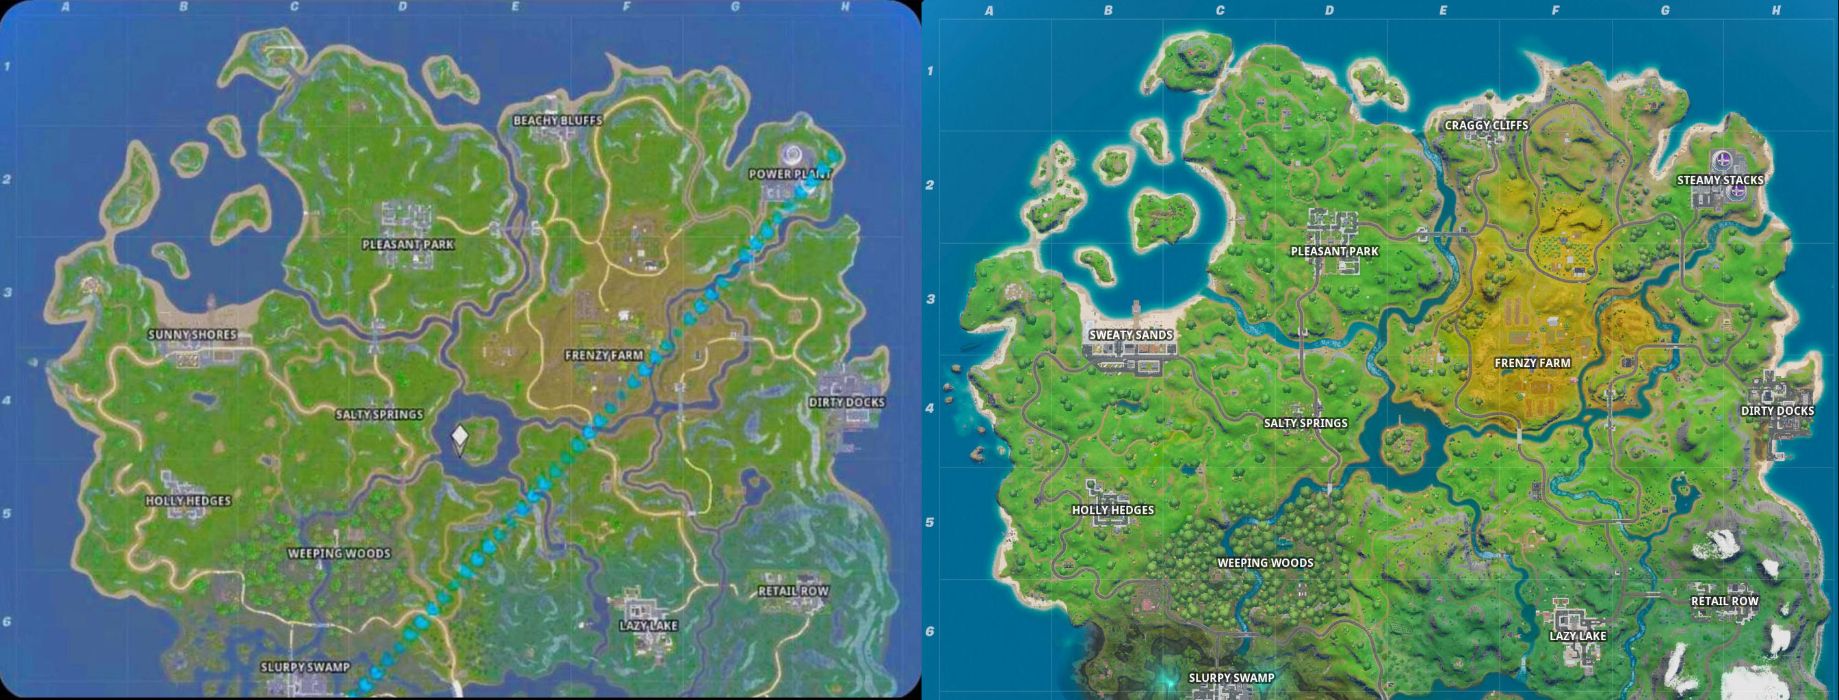 Fortnite Chapter 2 Map Comparison